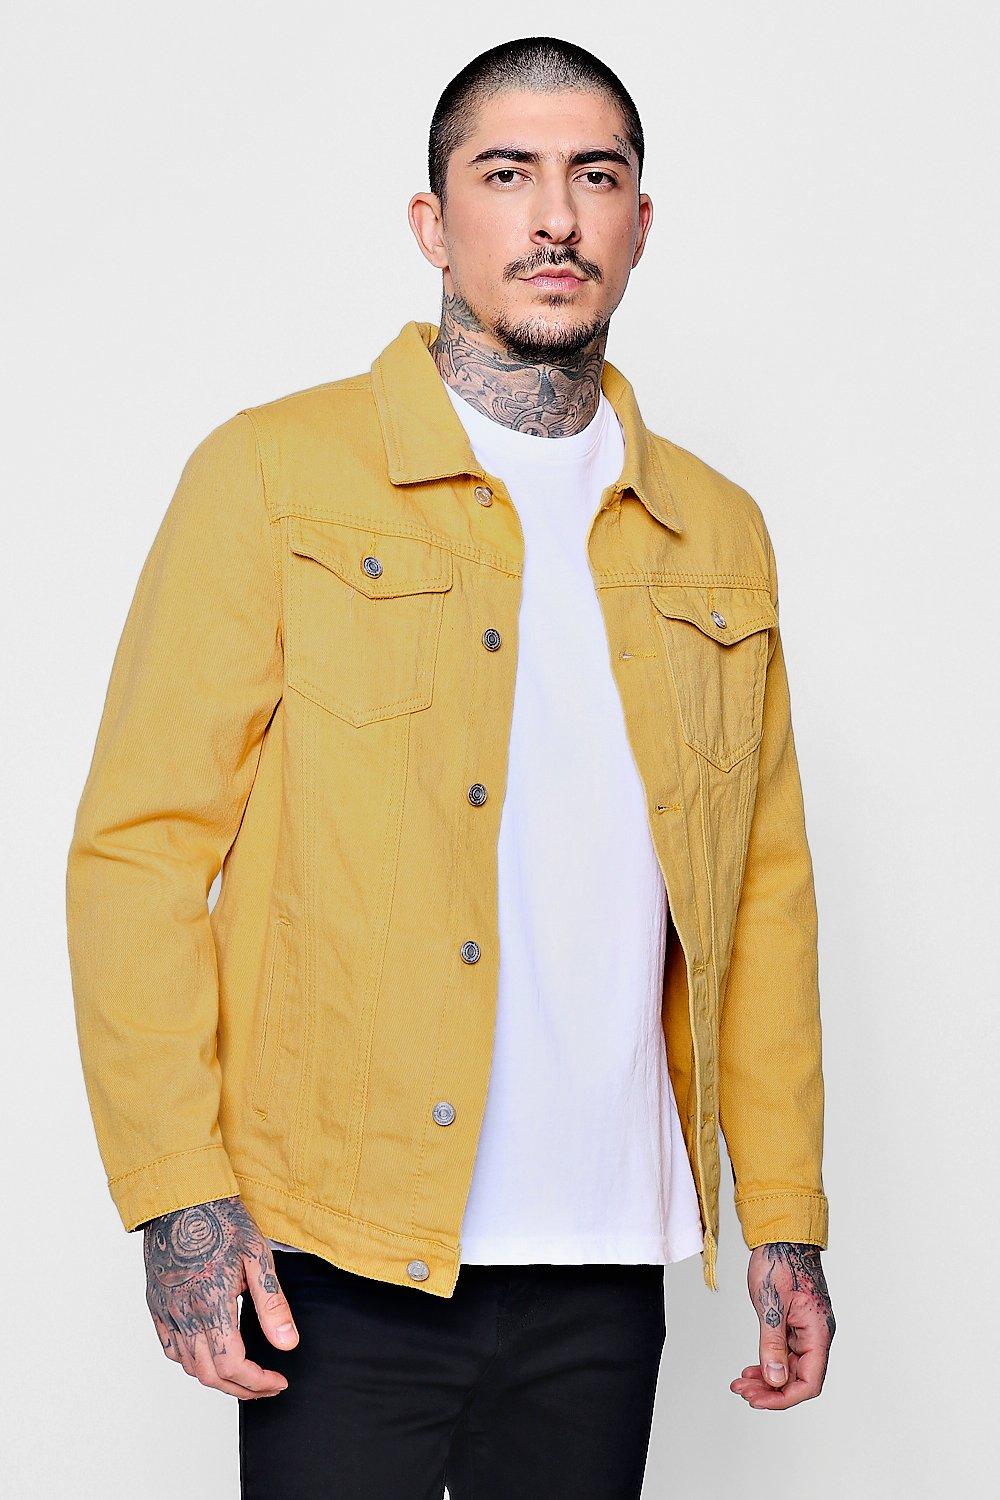 denim jacket yellow